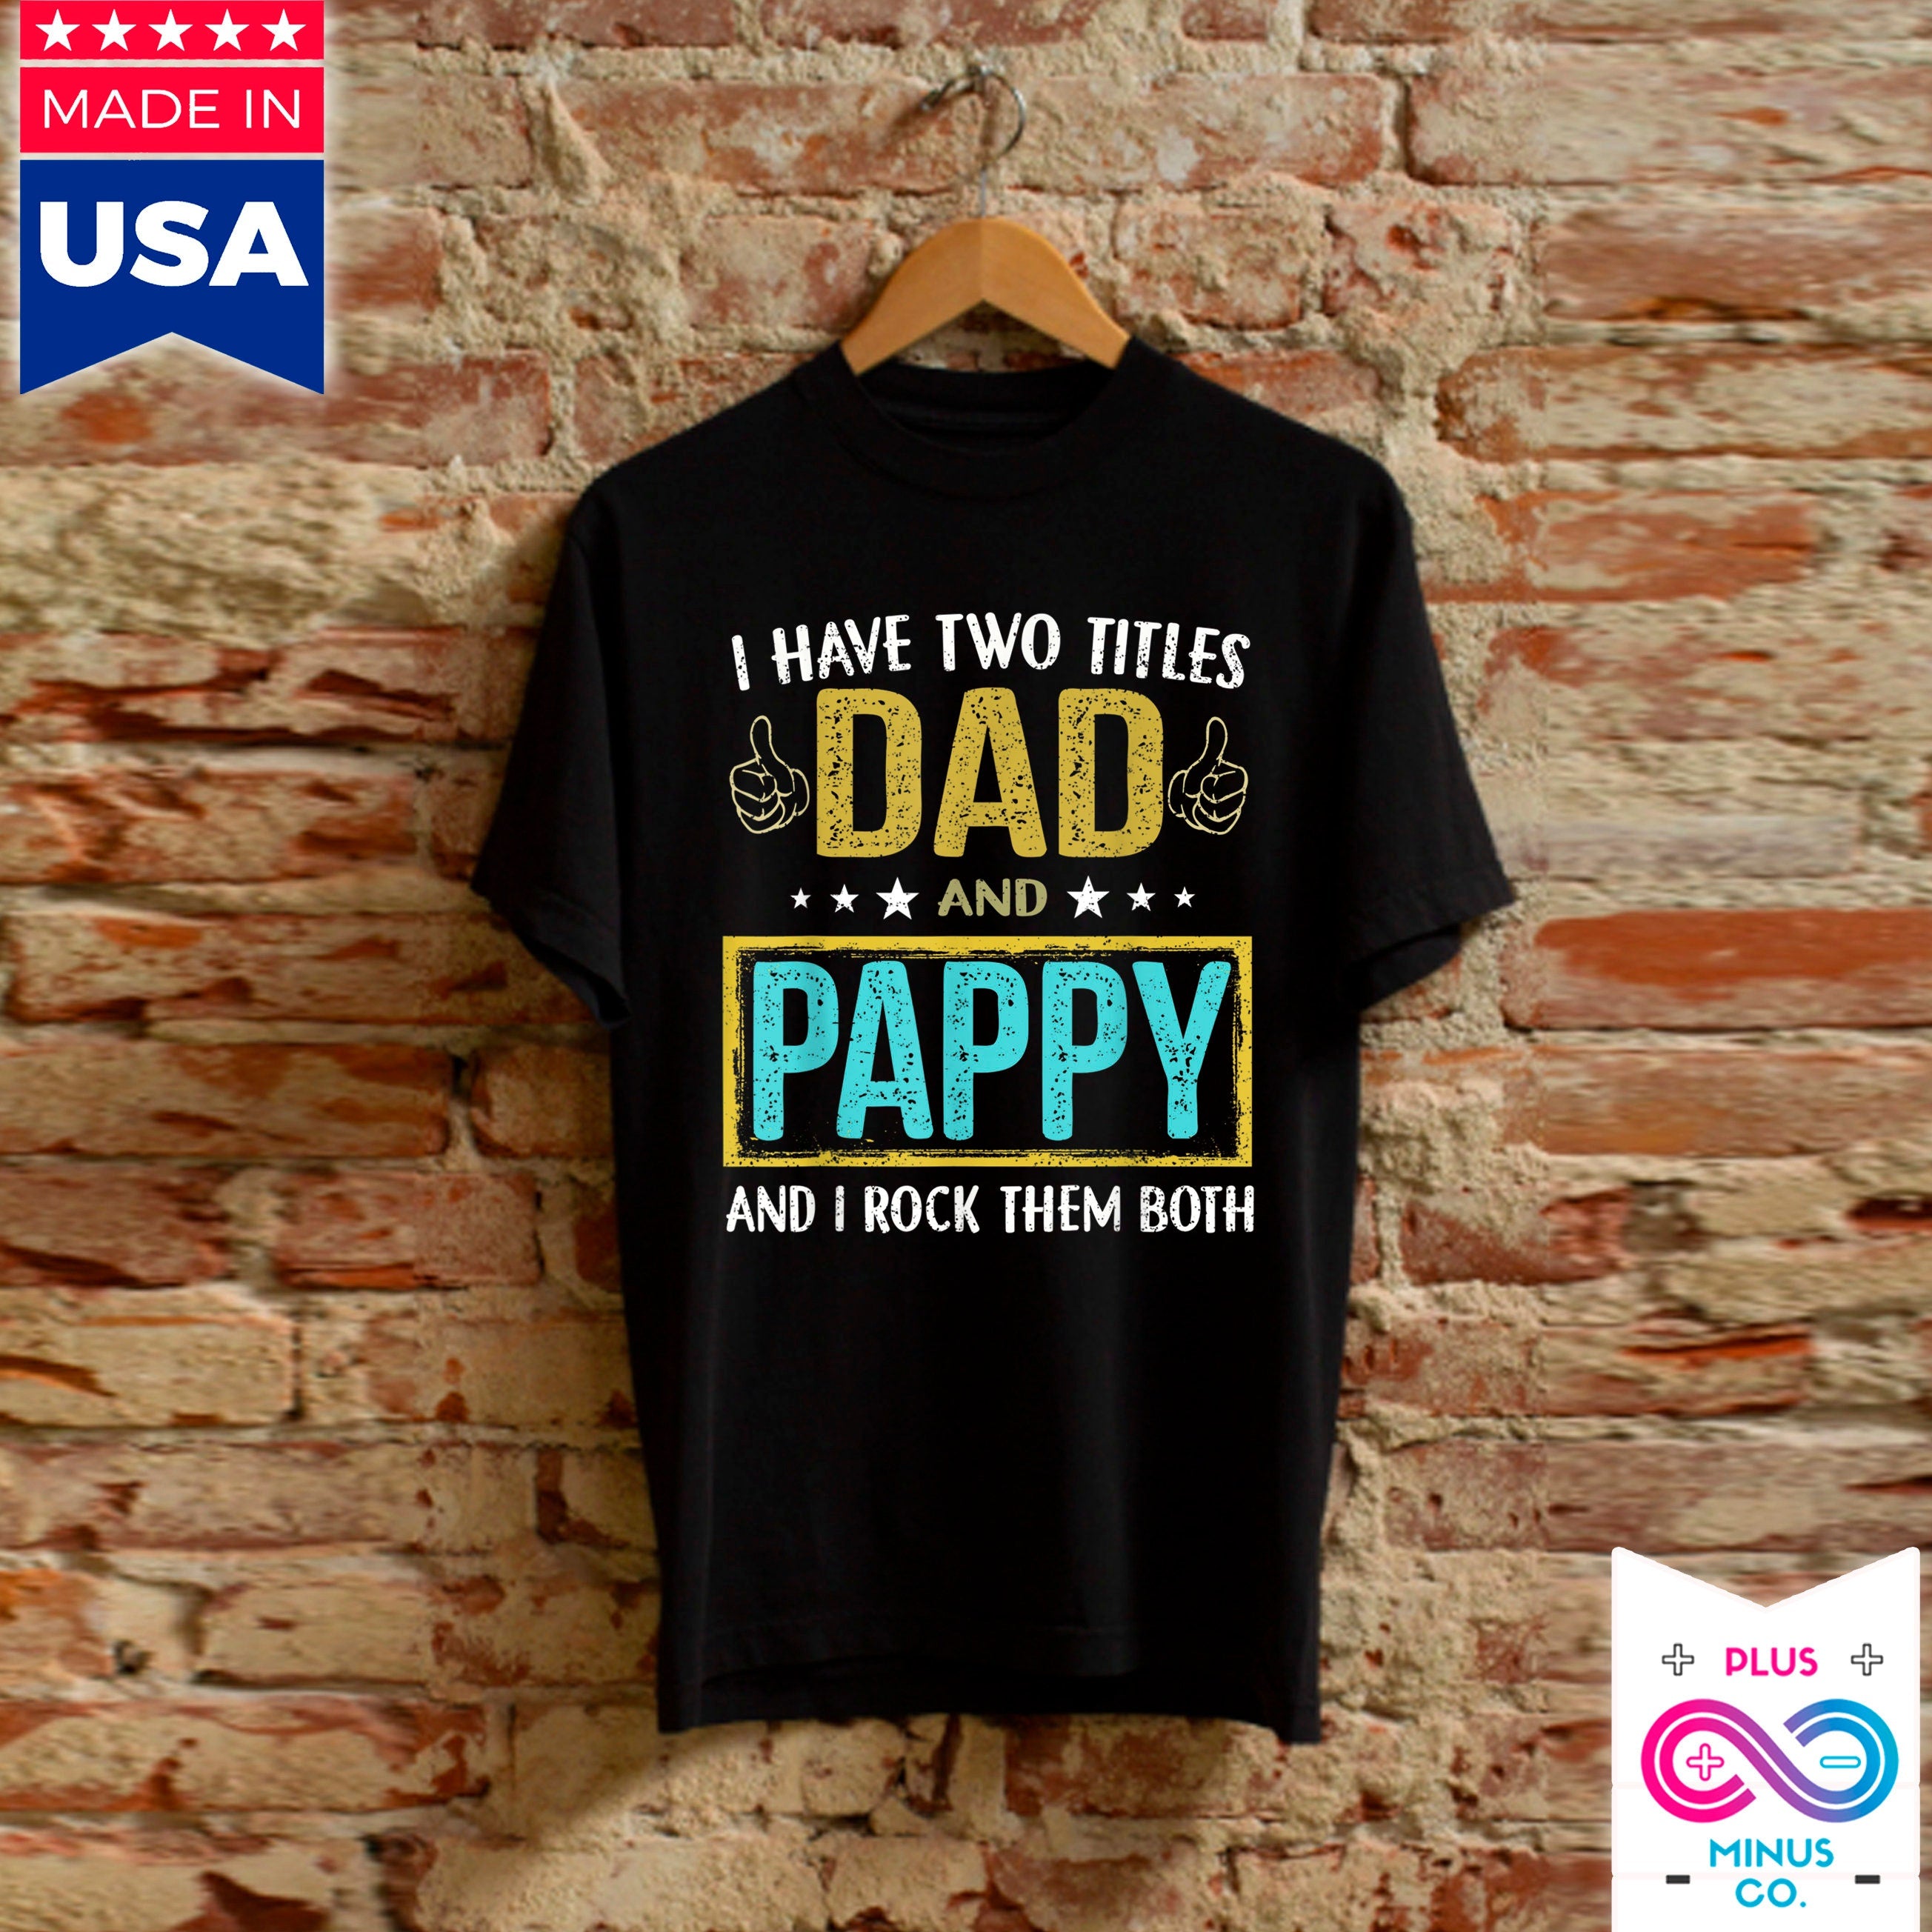 Men'S I Have Two Titles Dad And Pappy - падарункі для бацькі, футболкі, падарункі ад дачкі таце, падарункі на дзень бацькі, падарункі ад сына таце - plusminusco.com